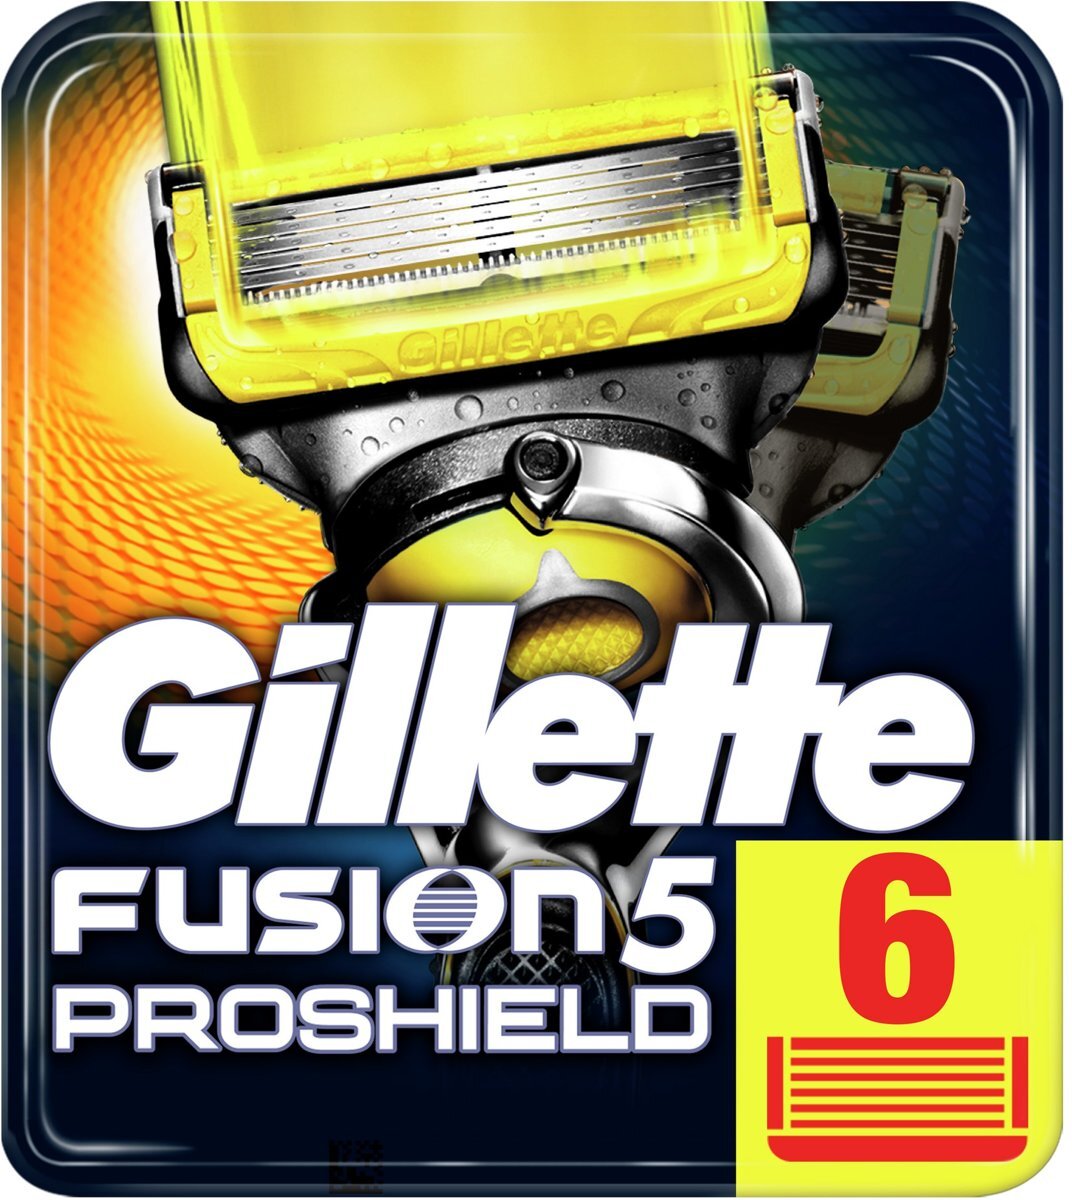 Gillette Fusion5 Proshield - 6 stuks - Scheermesjes